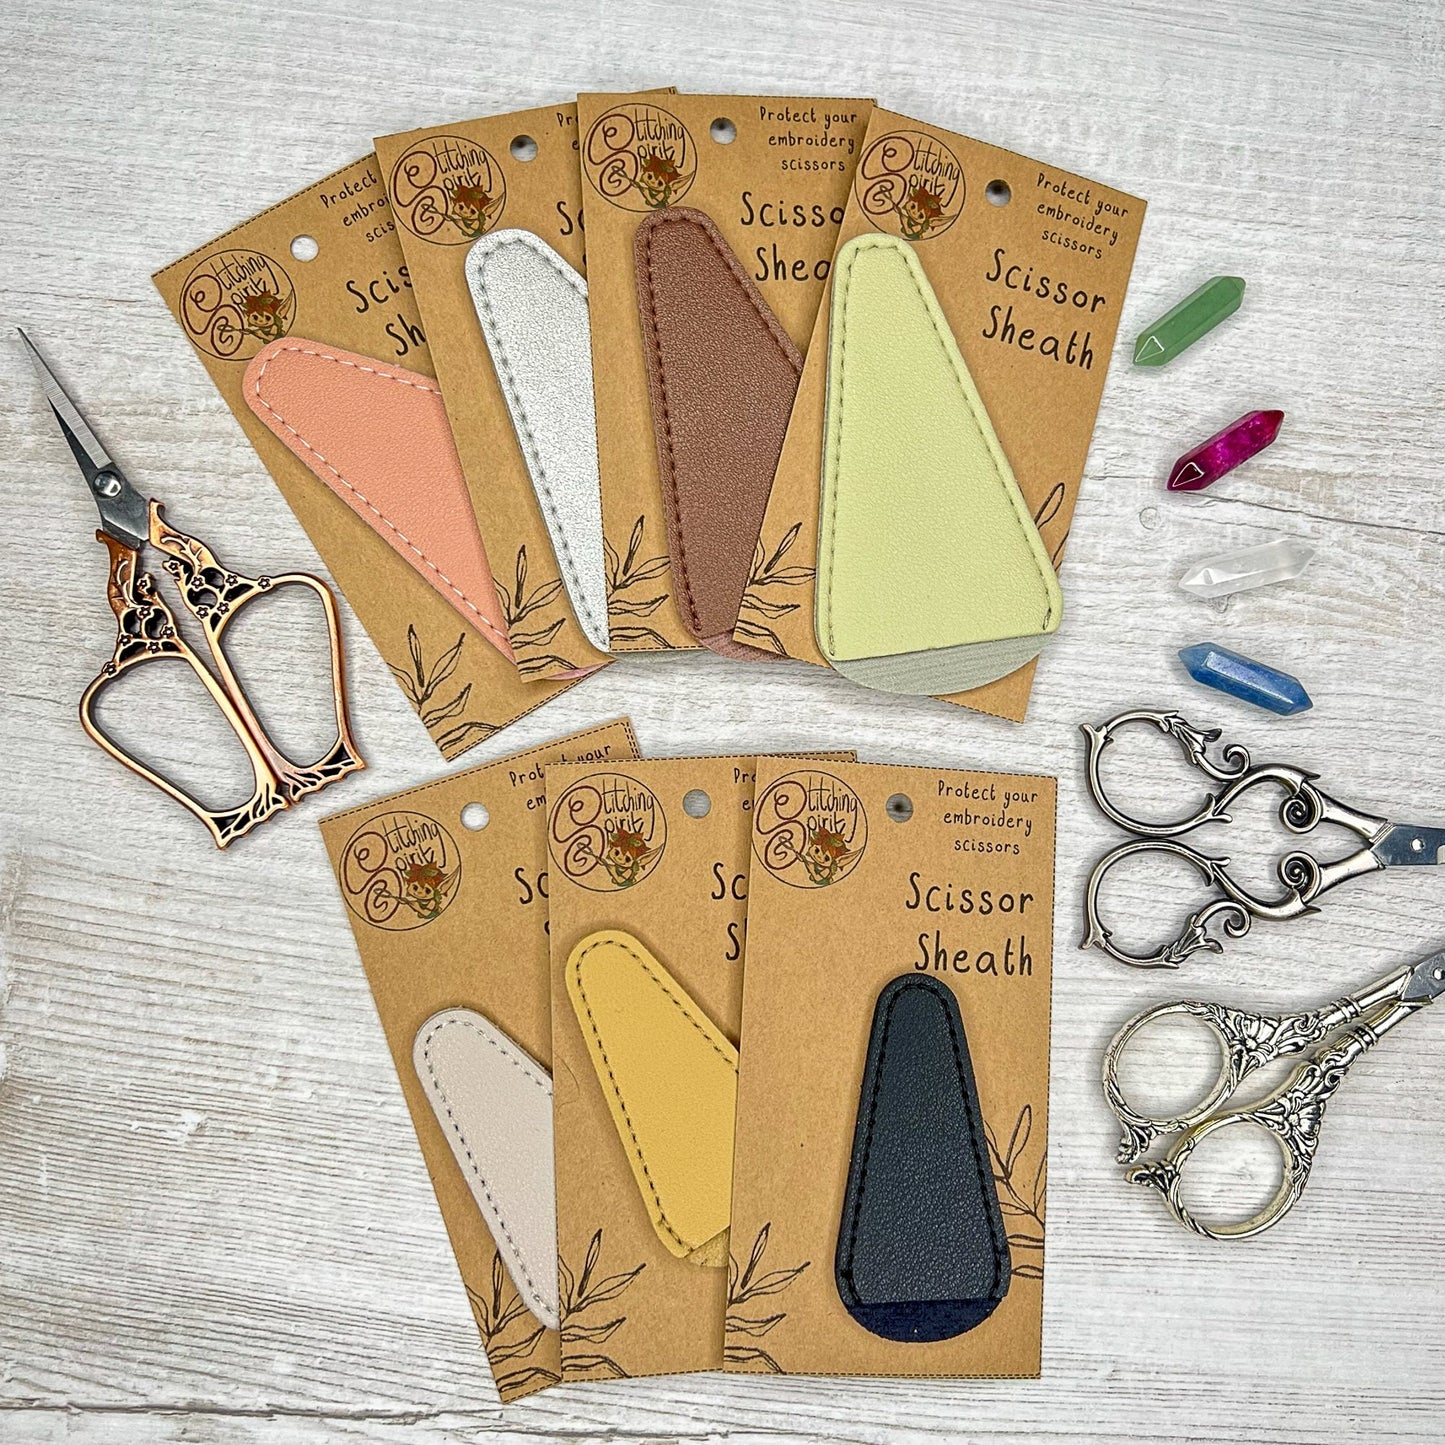 Embroidery scissor sheath / case